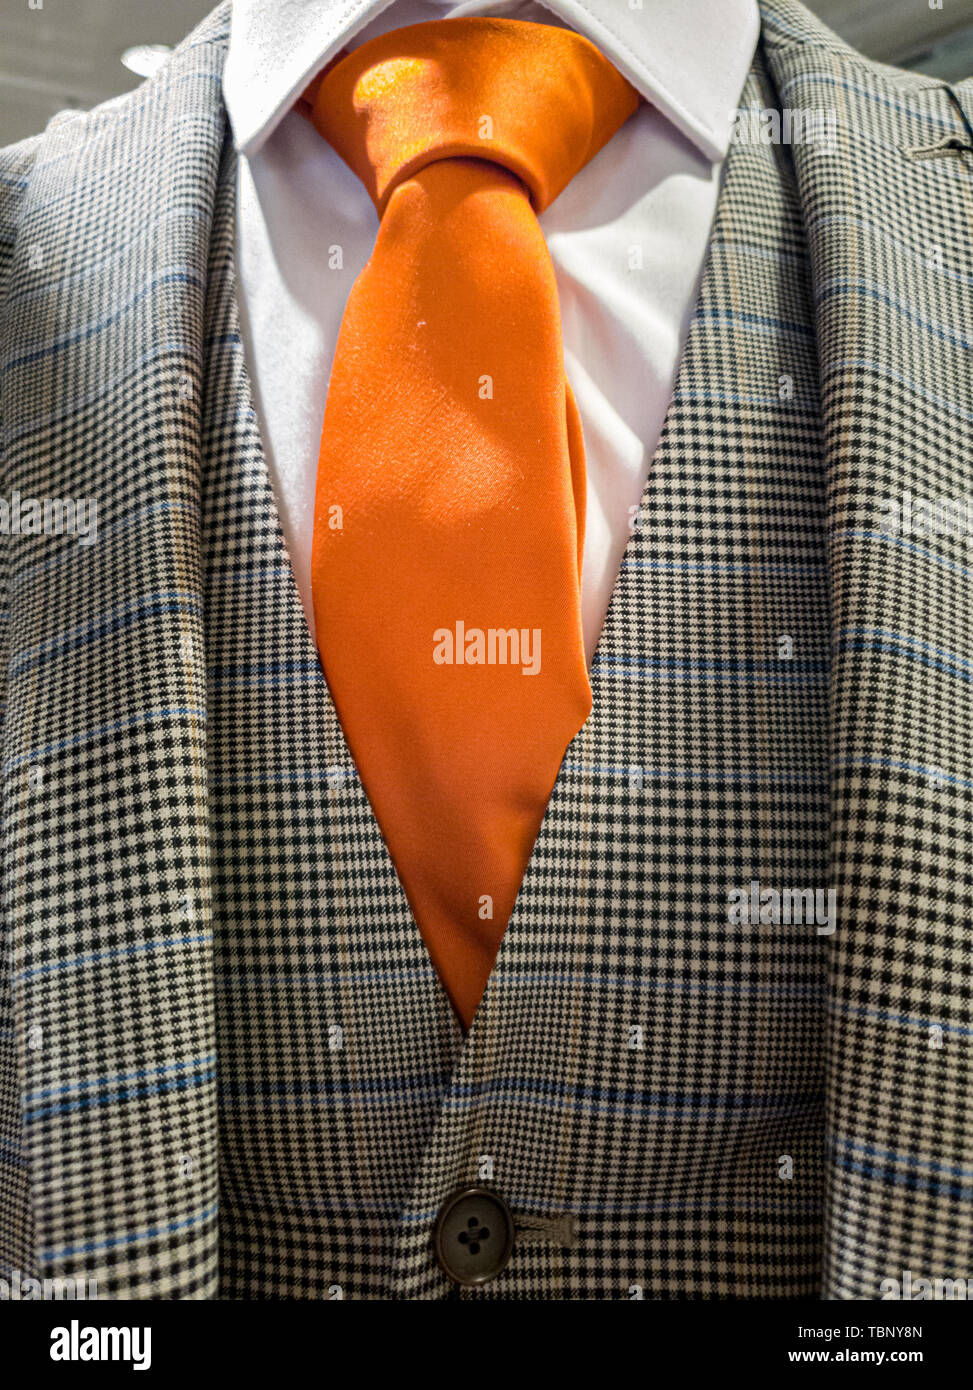 Latest trends in Suit, shirt and tie combination - Orange tie Stock Photo